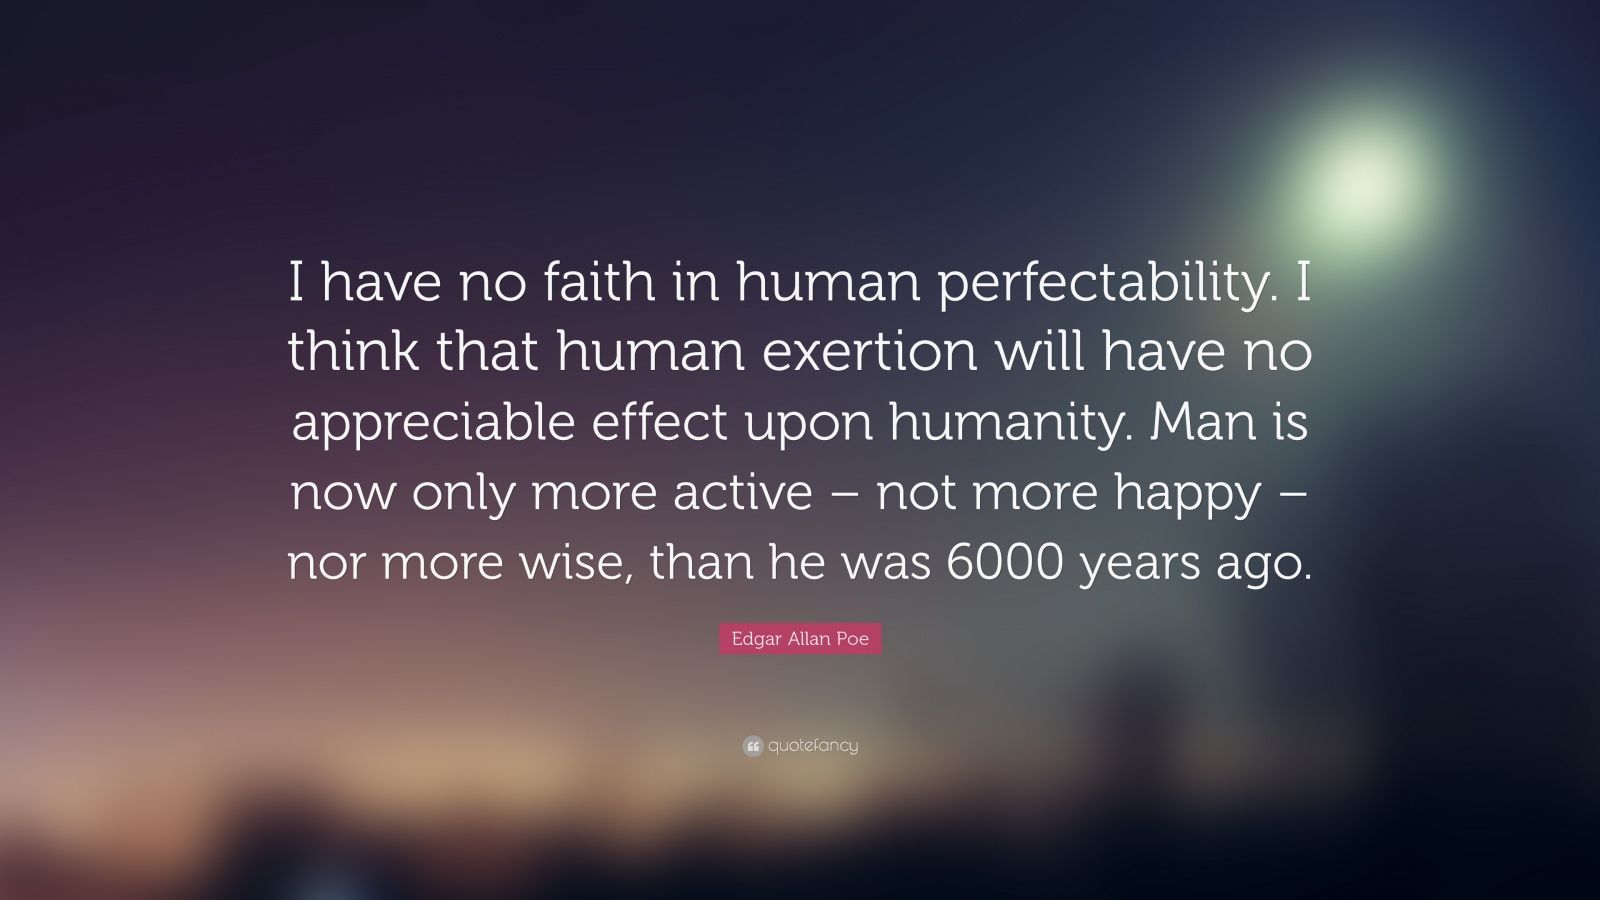 quotes love deep philosophy no Poe Allan in Quote: have human Edgar â€œI faith